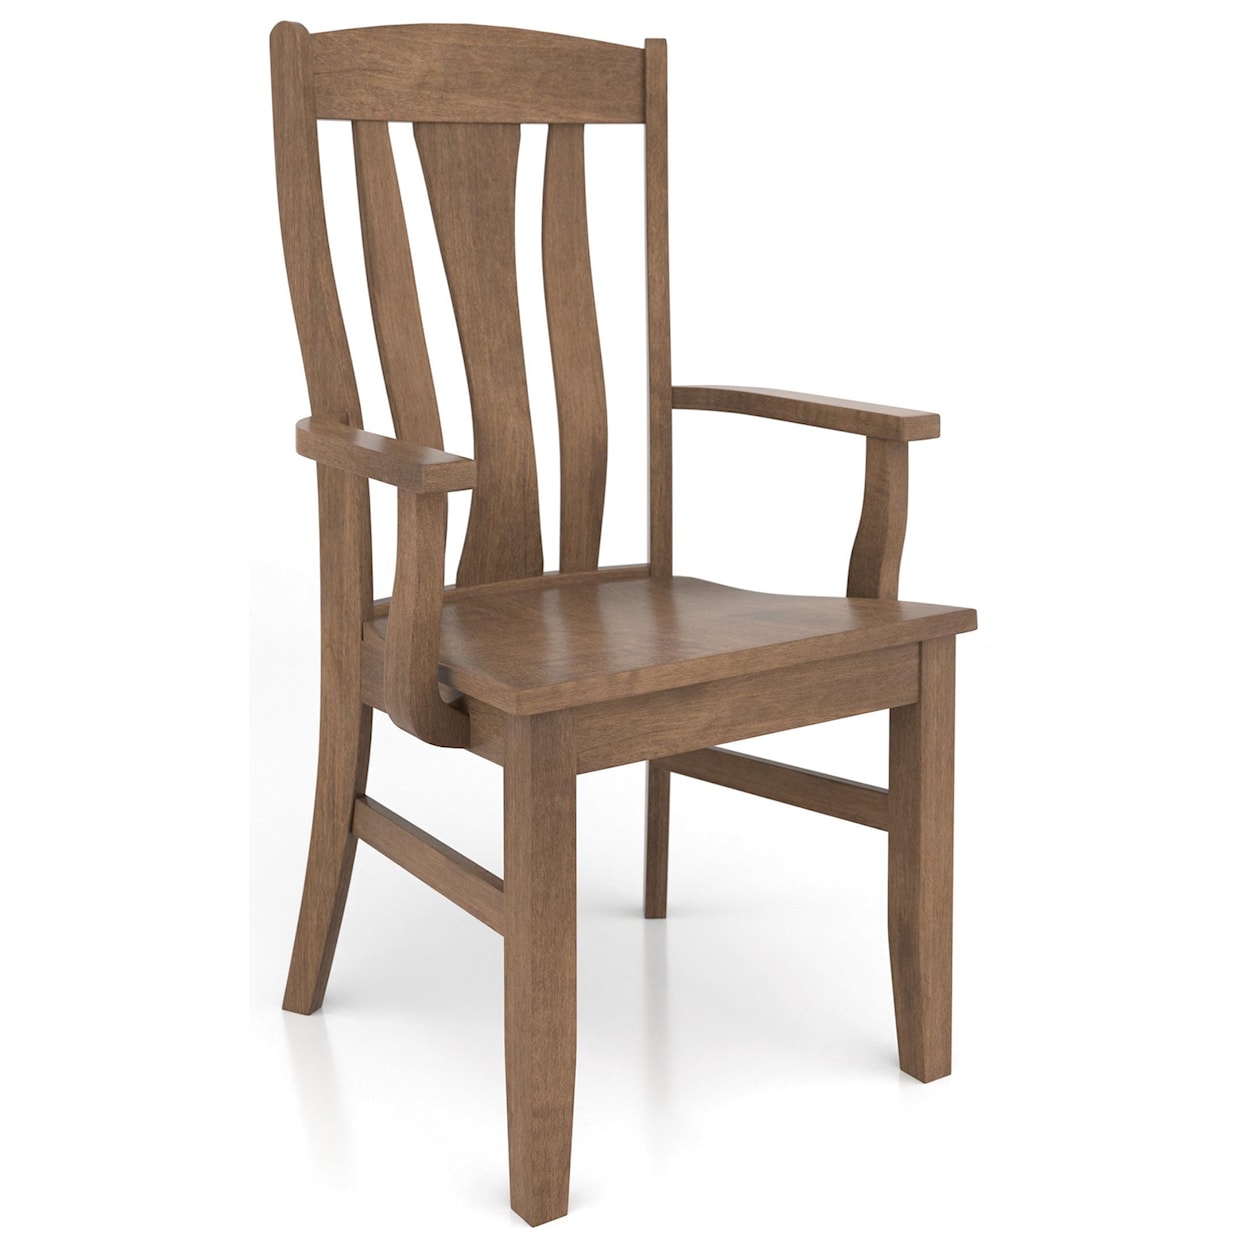 Wengerd Wood Products Samba Arm Chair